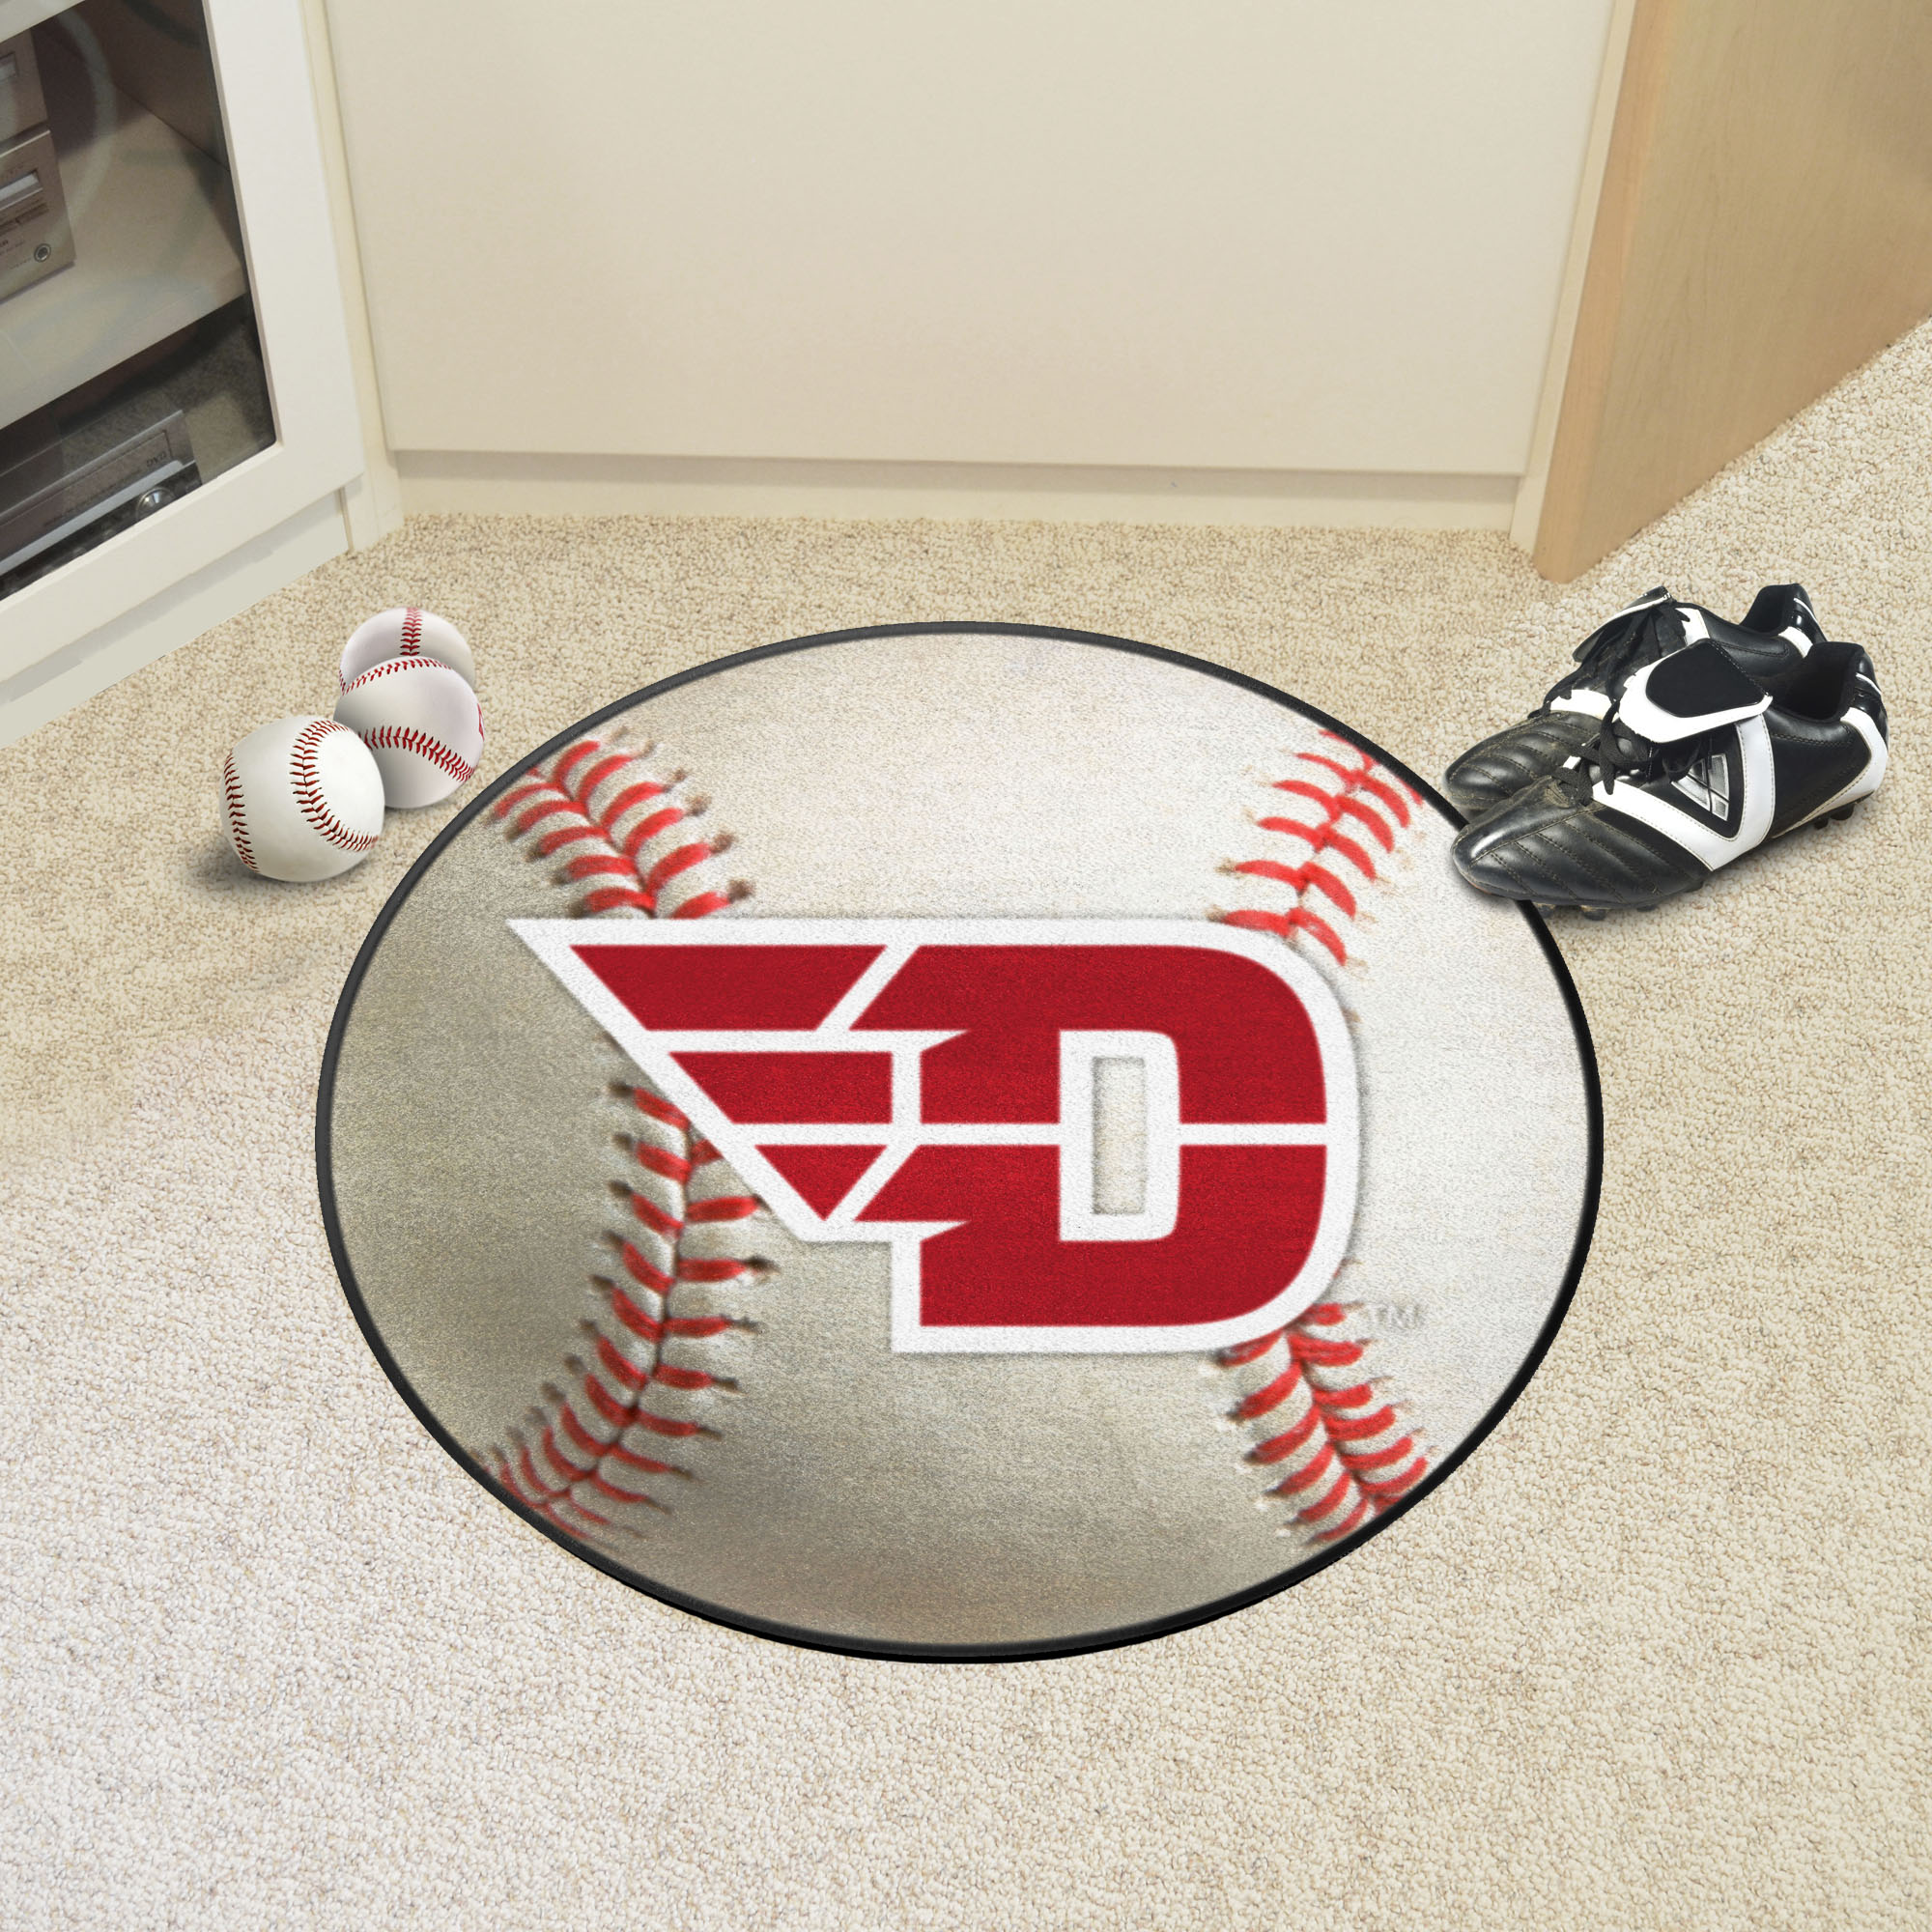 University of Dayton Ball Shaped Area rugs (Ball Shaped Area Rugs: Baseball)